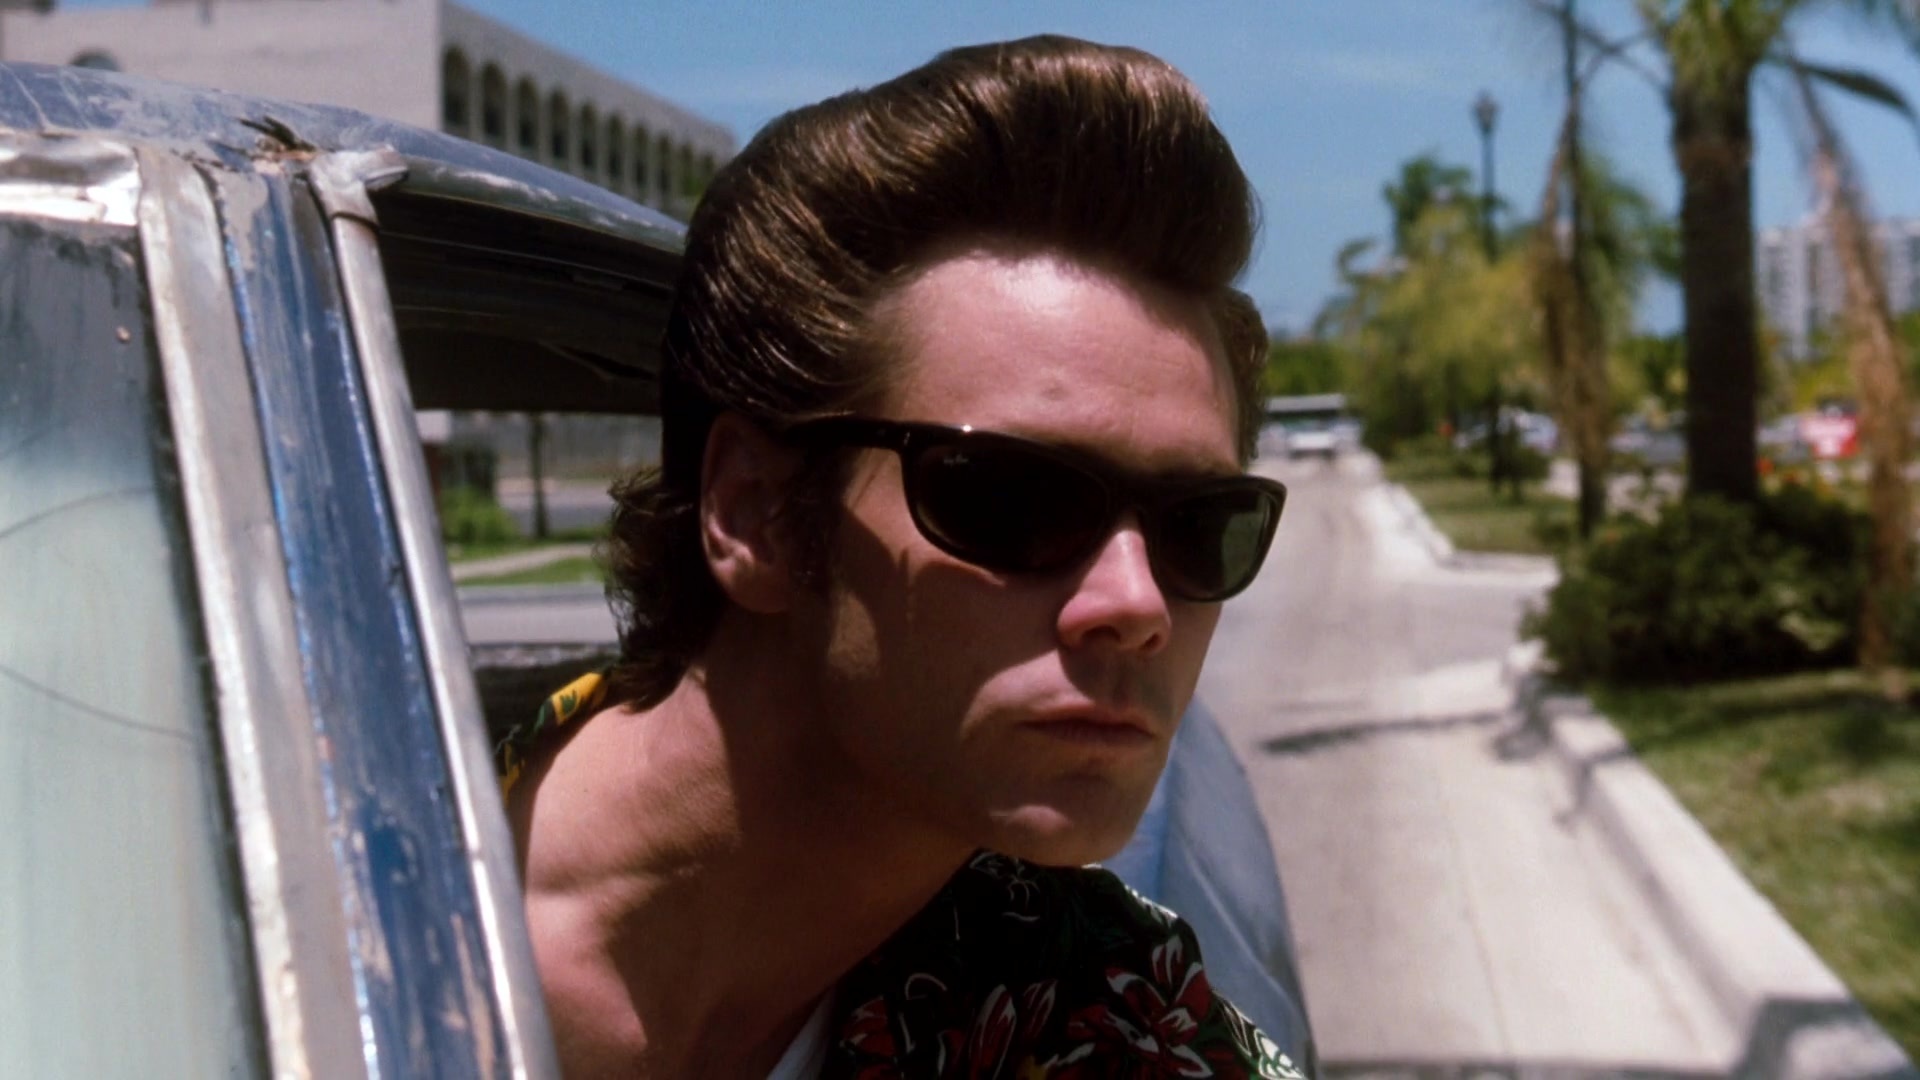 Ace Ventura: Jim Carrey, 1994 film, Iconic role. 1920x1080 Full HD Wallpaper.